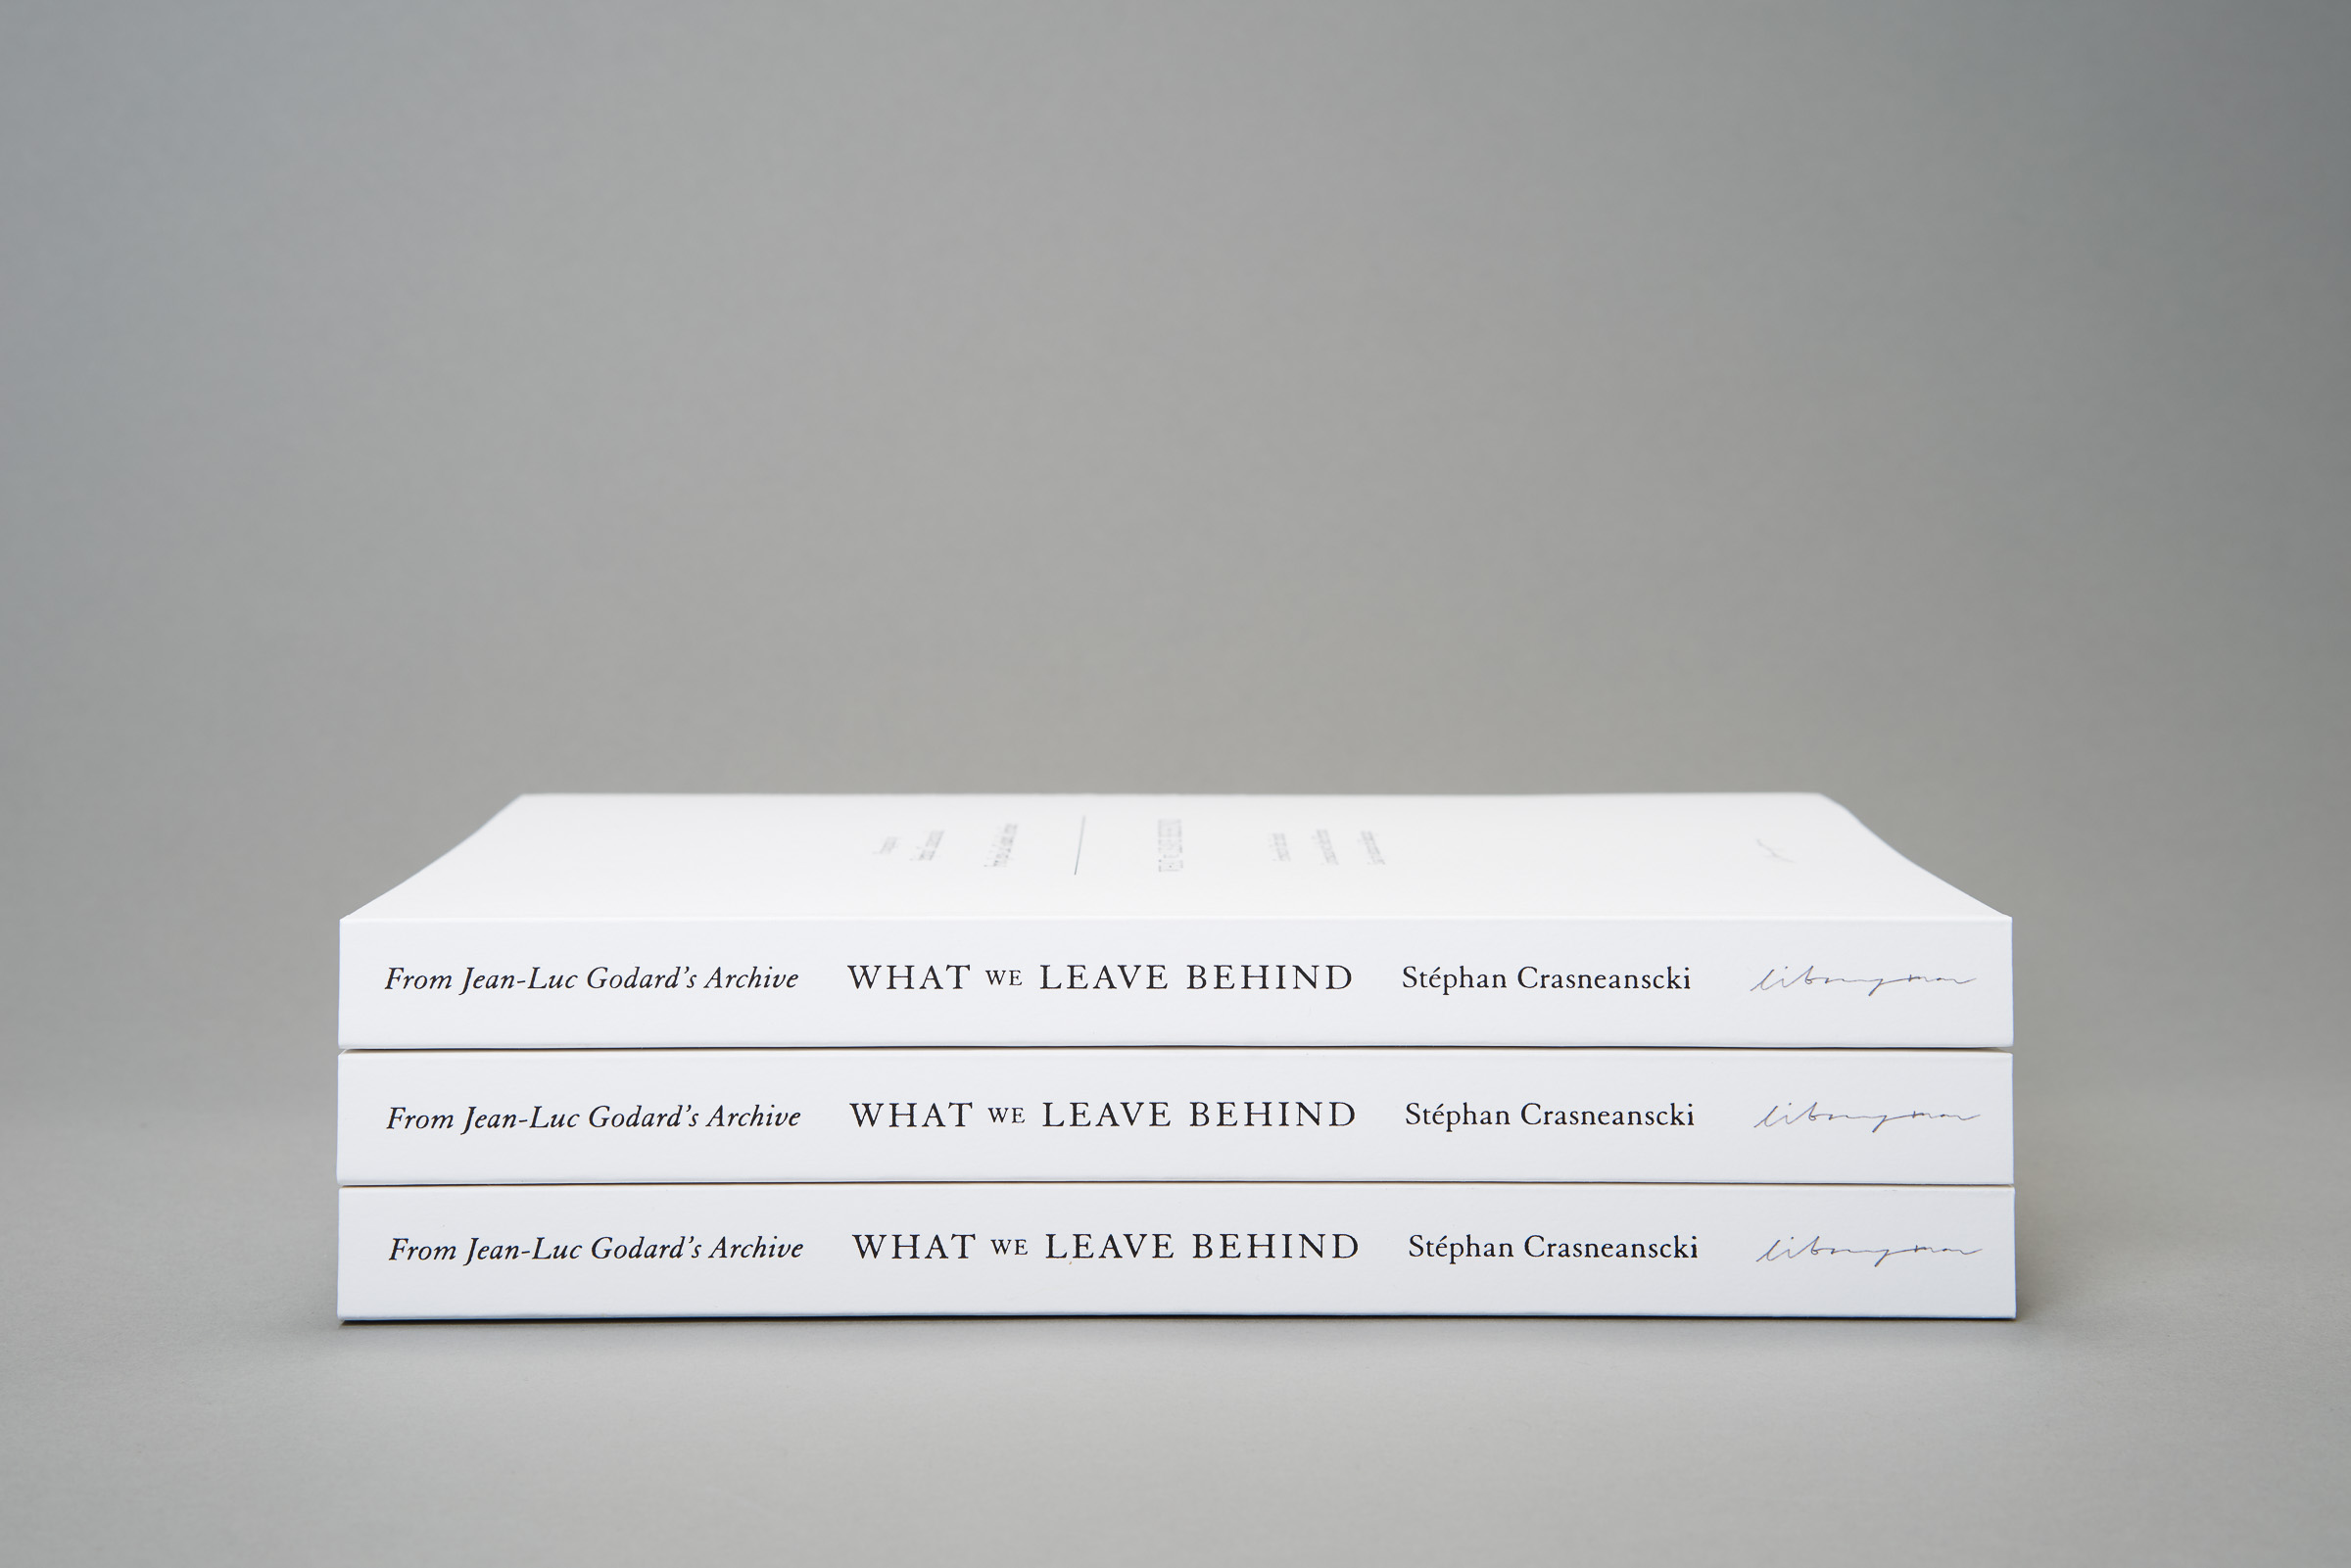 Stéphan Crasneanscki — What We Leave Behind — Book